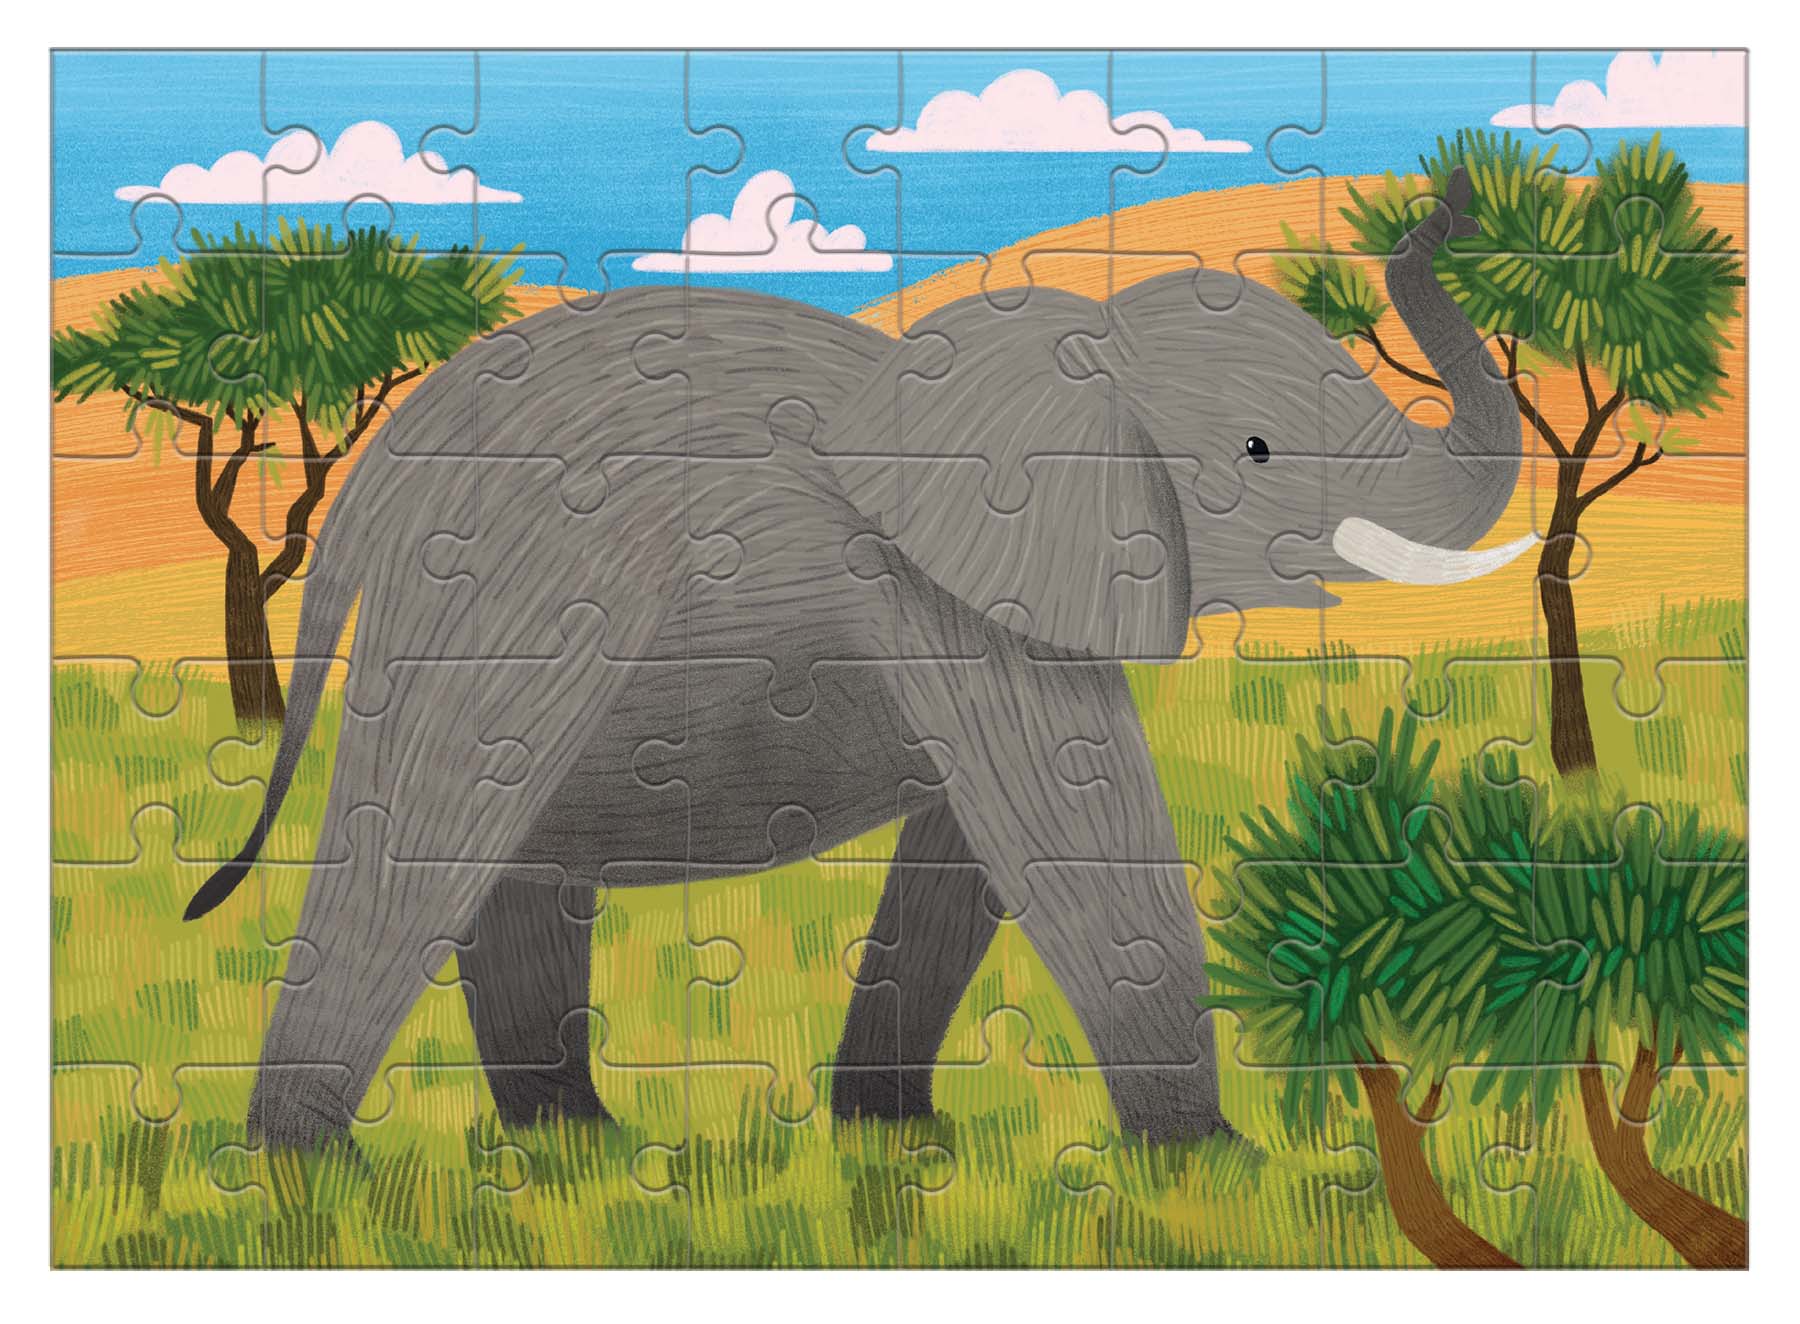 Siddidata Katha Puzzle (Sri Ganesh Puran Series) Elephant Jigsaw Puzzle By Puzzle Desh